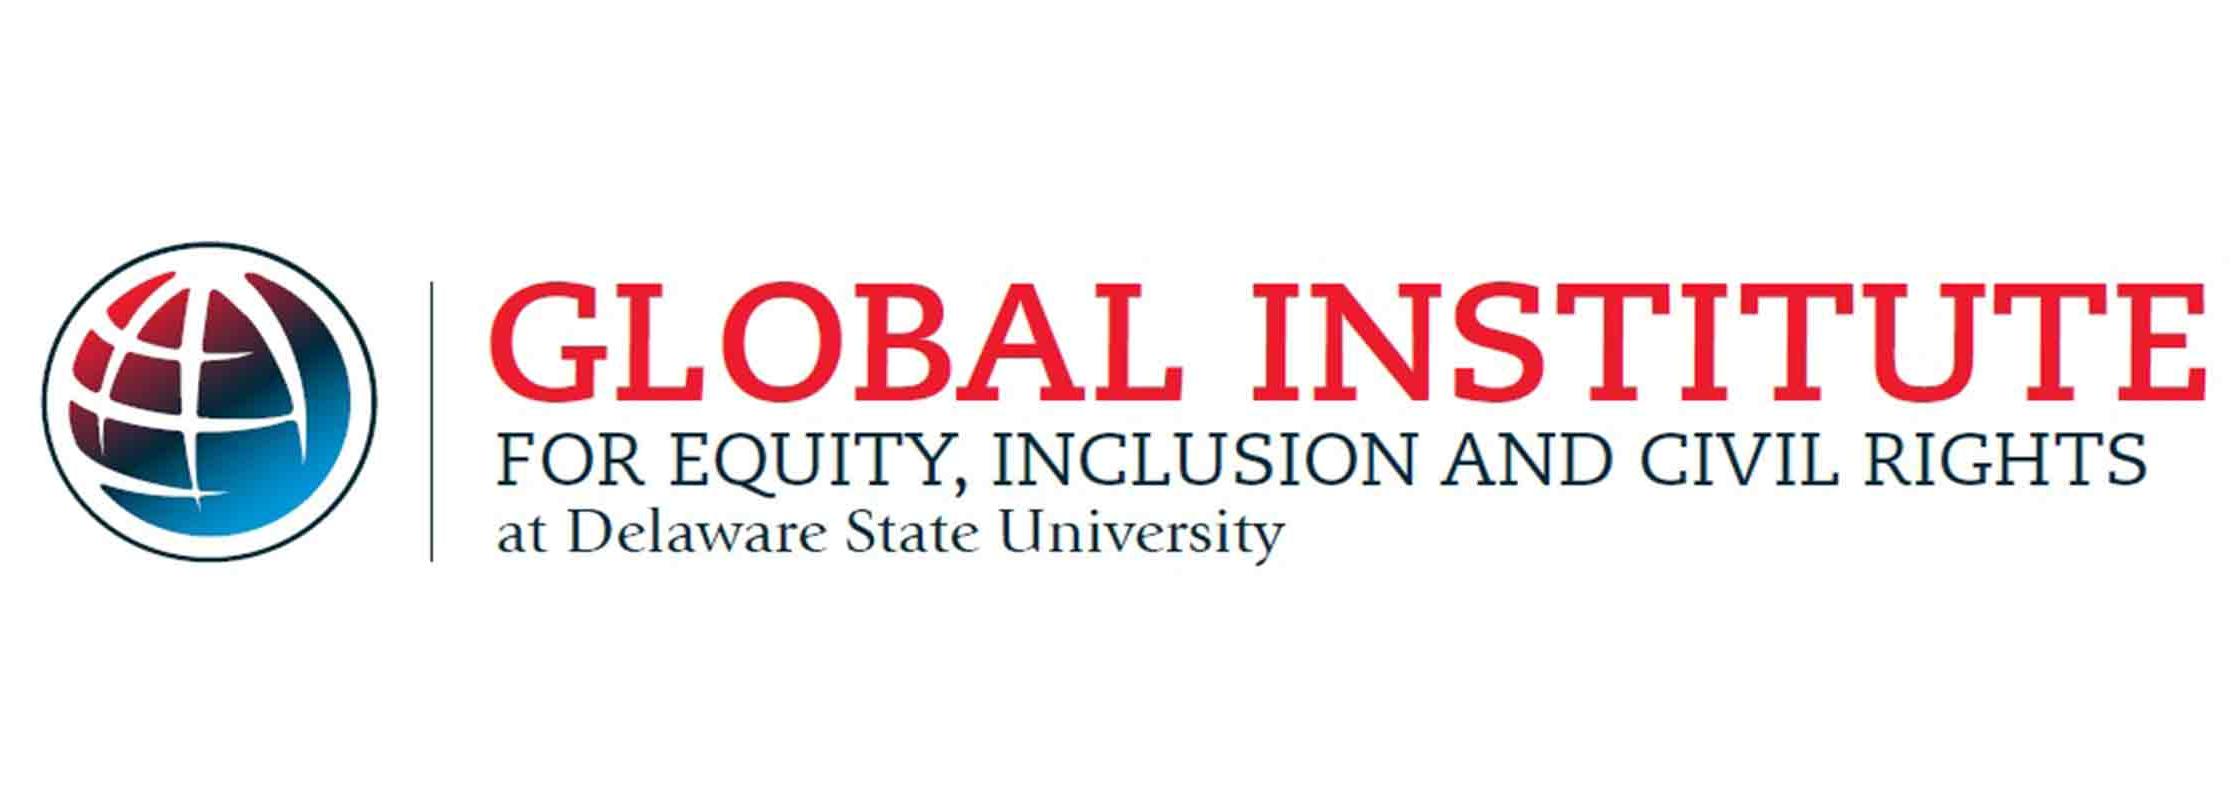 global institute logo